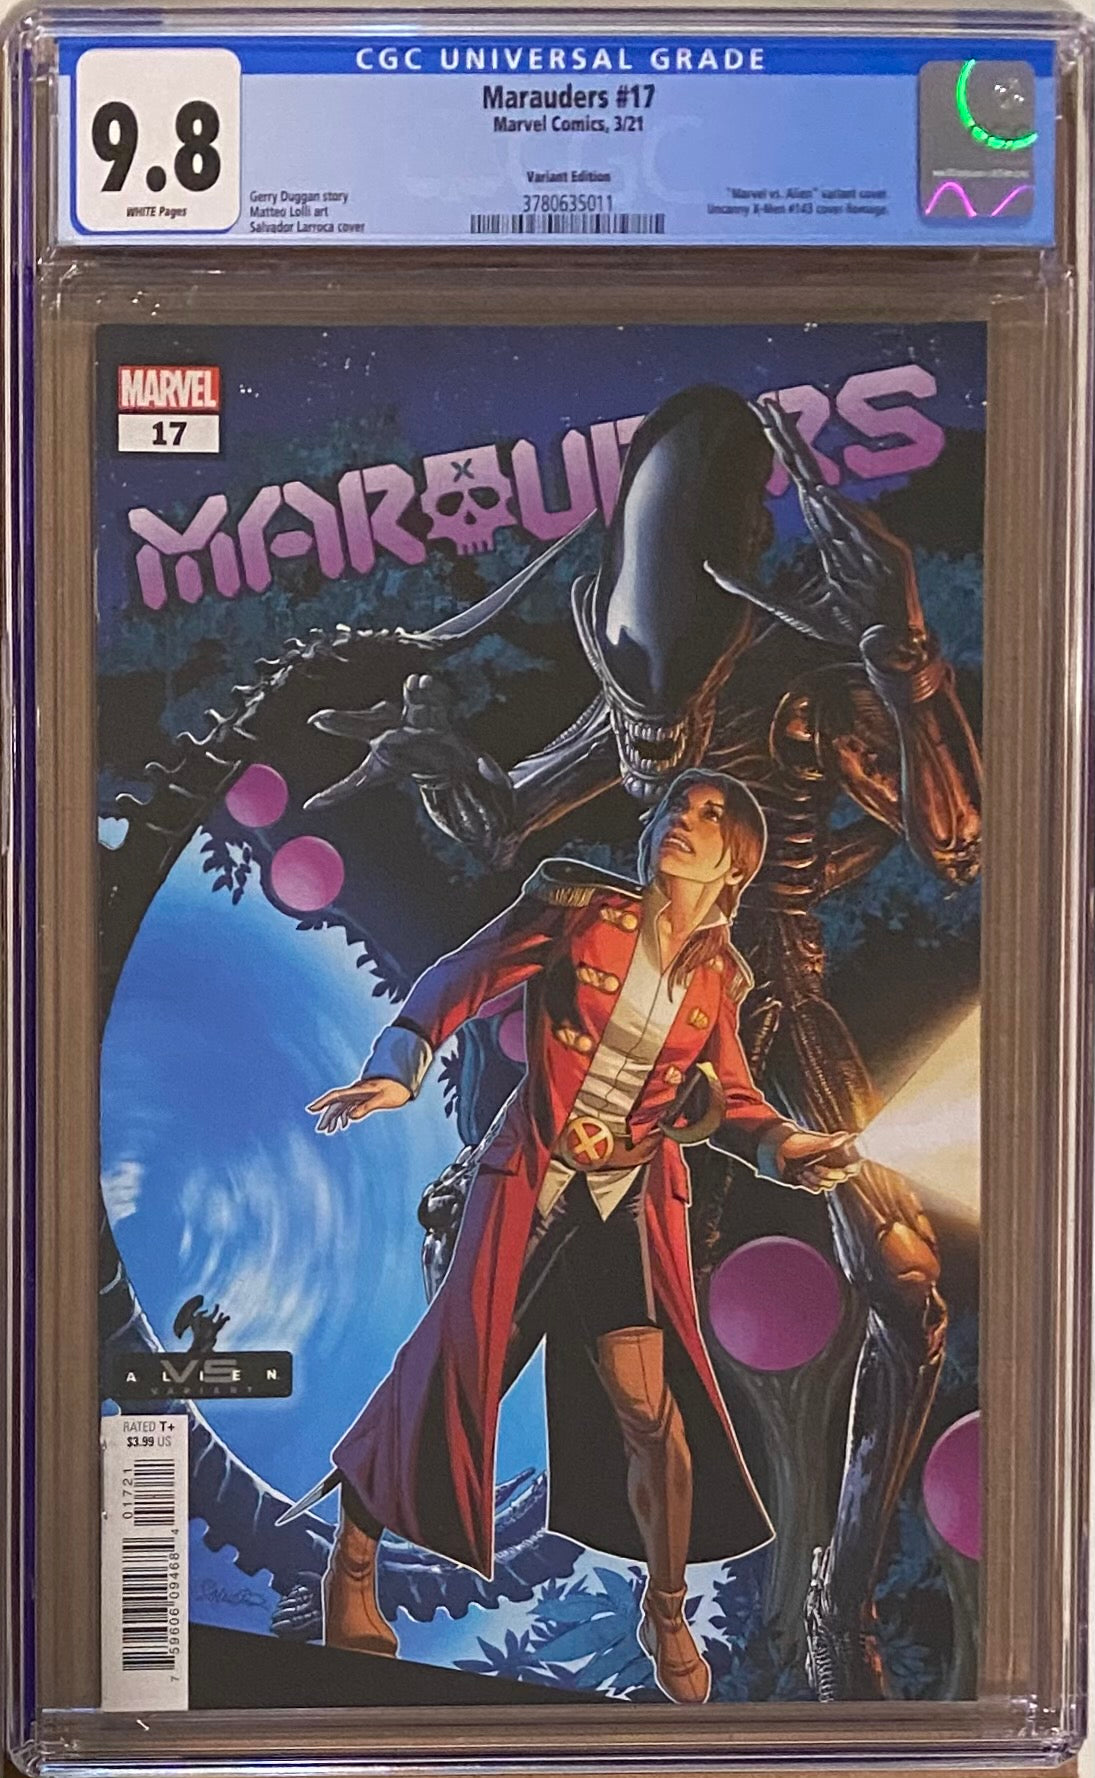 Marauders #17 Larroca "Marvels vs. Aliens" Variant CGC 9.8